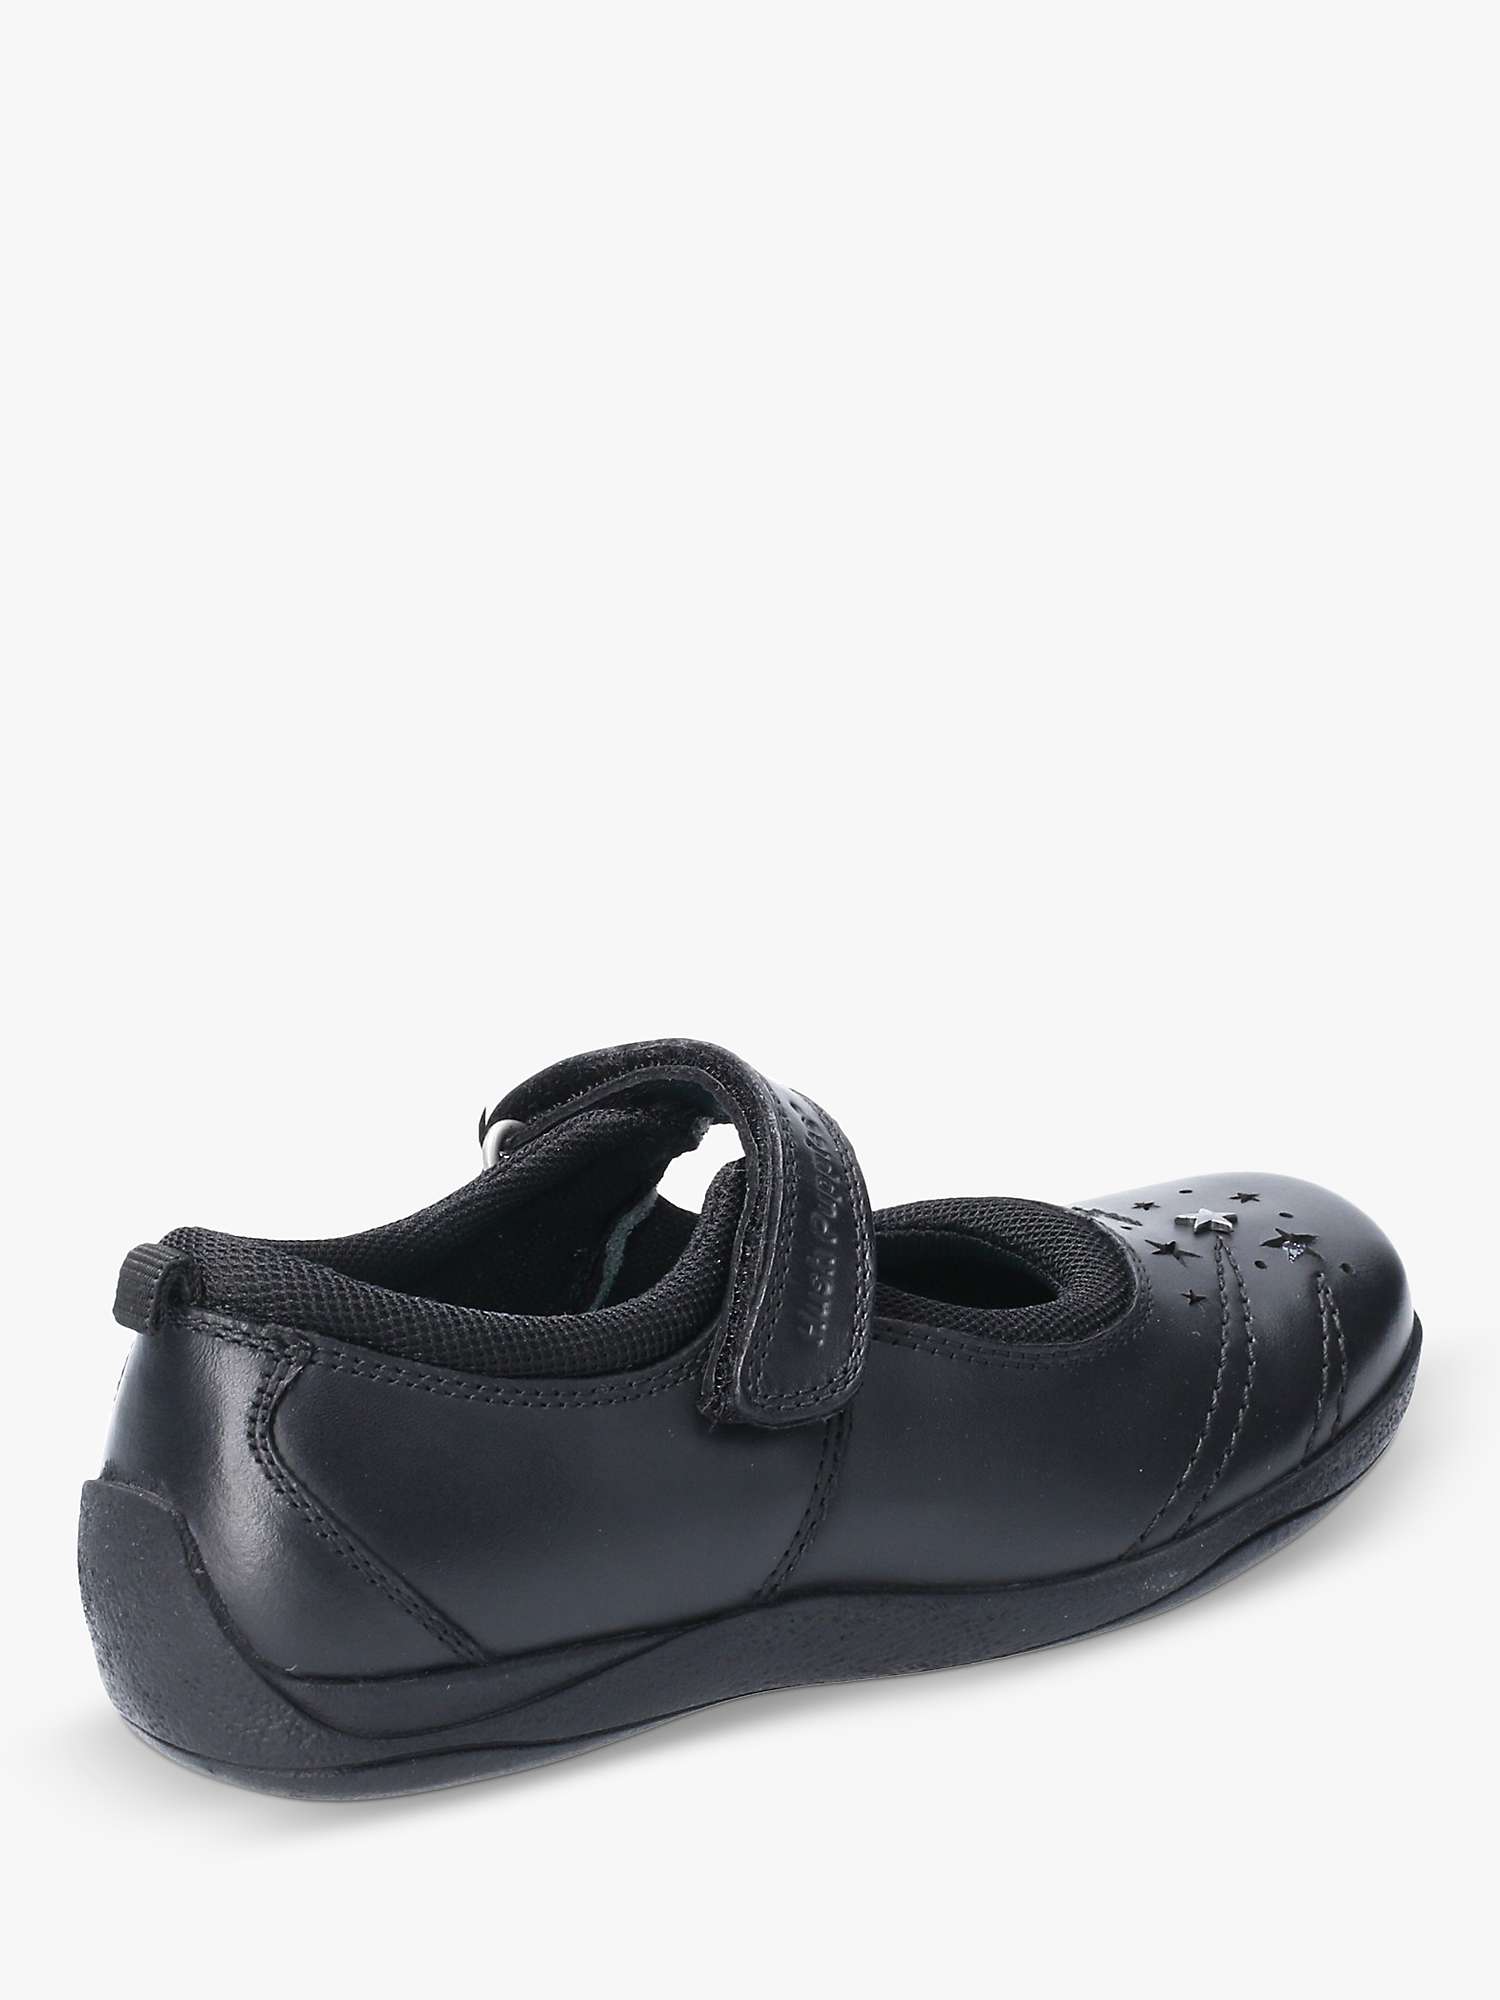 Buy Hush Puppies Kids' Amber Senior Leather School Shoes, Black Online at johnlewis.com